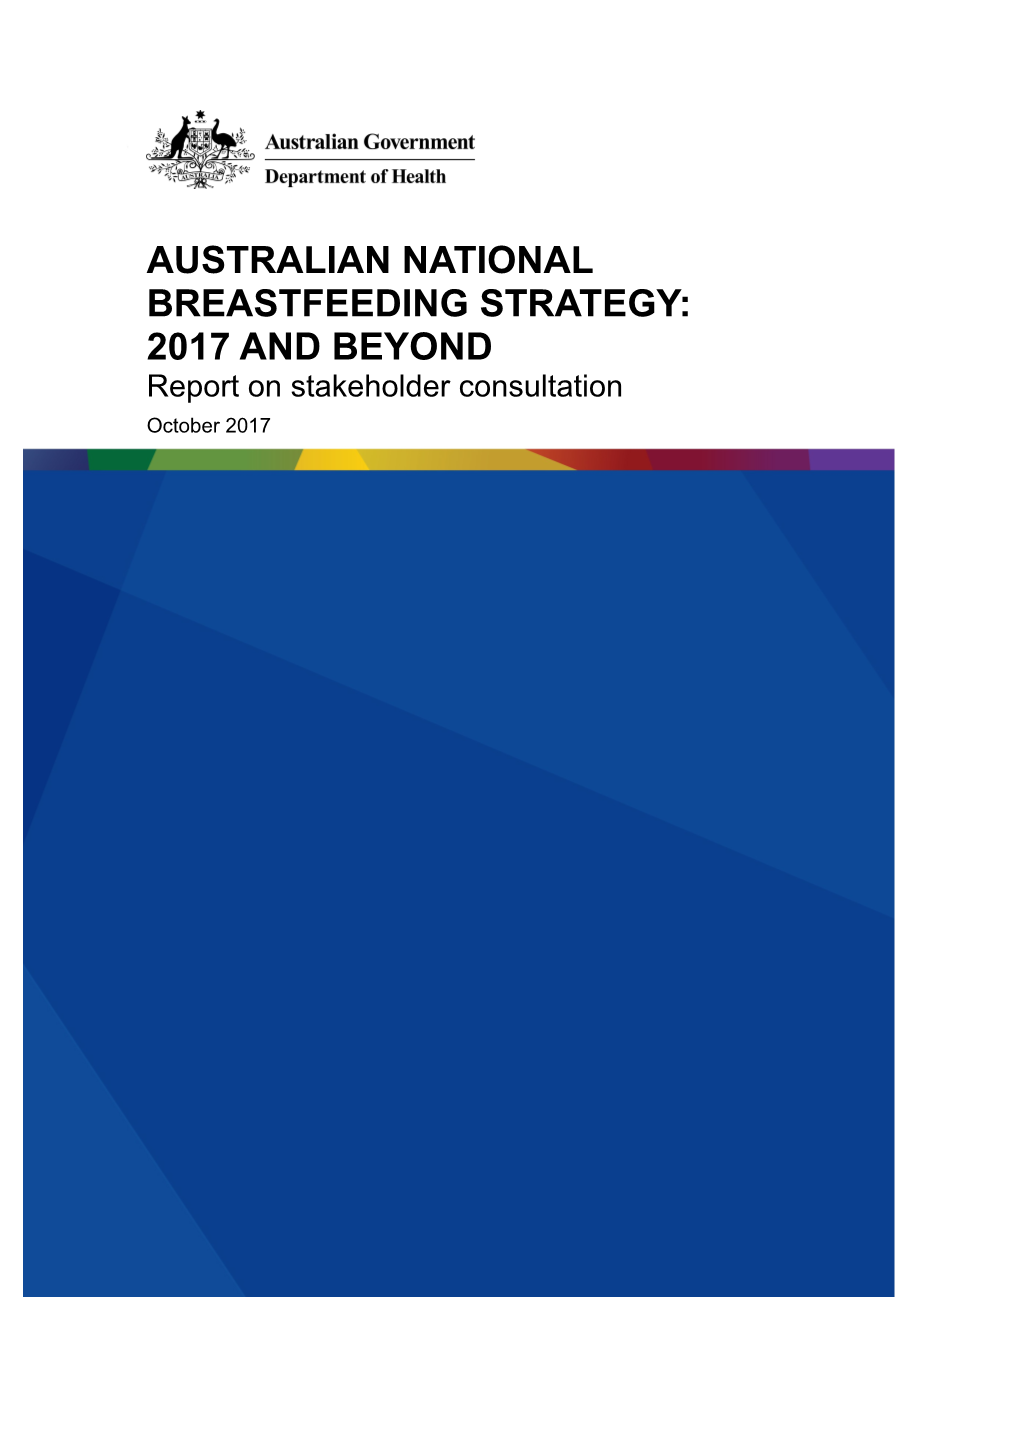 Australian National Breastfeeding Strategy 2017 and Beyond